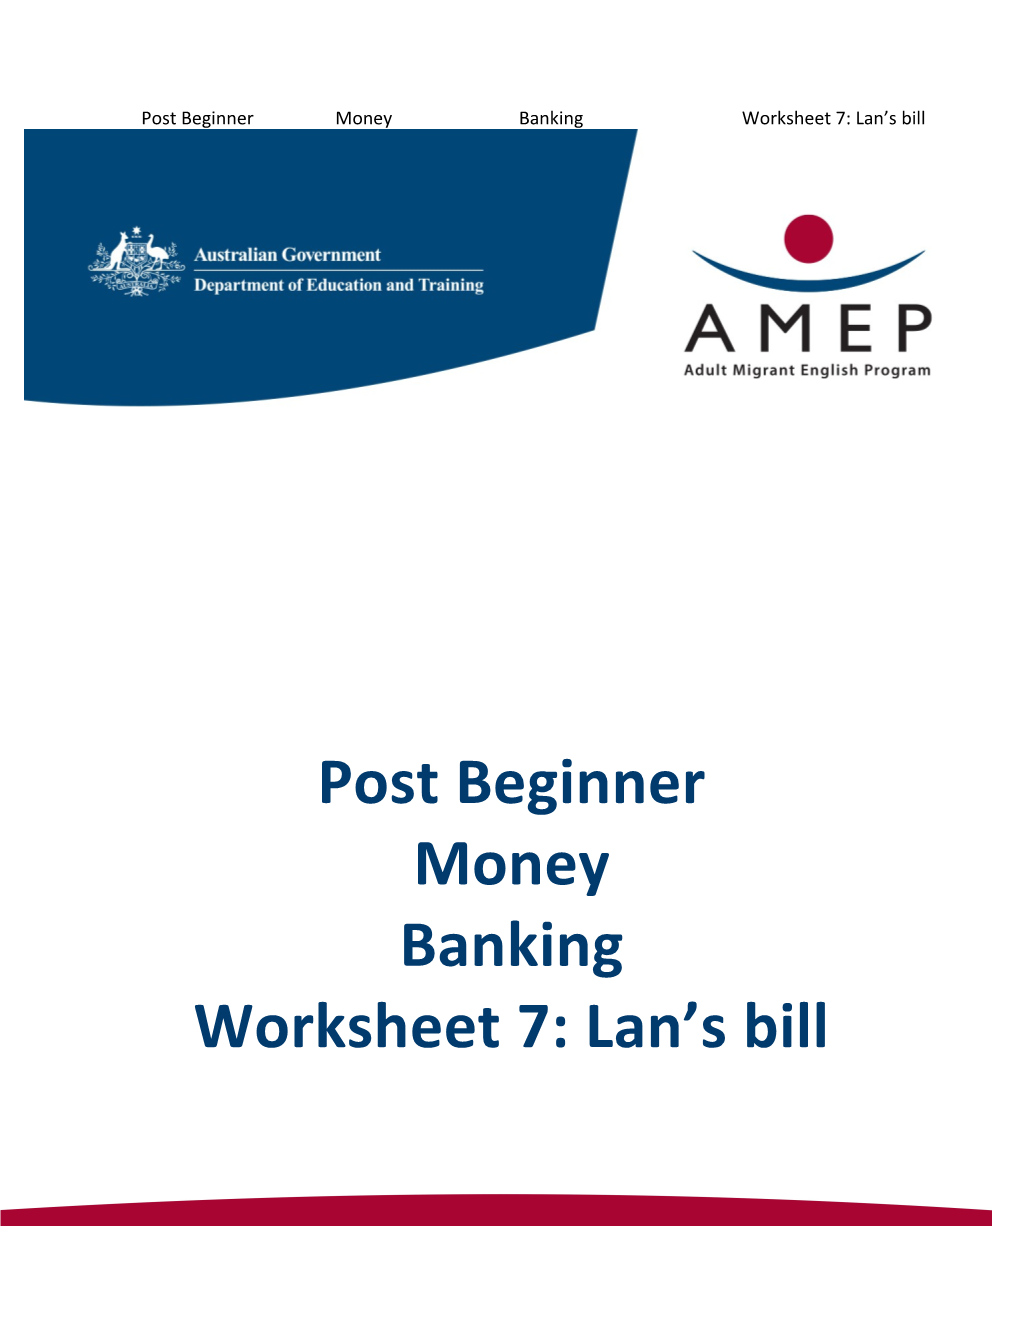 Post Beginner Money Banking Worksheet 7: Lan S Bill